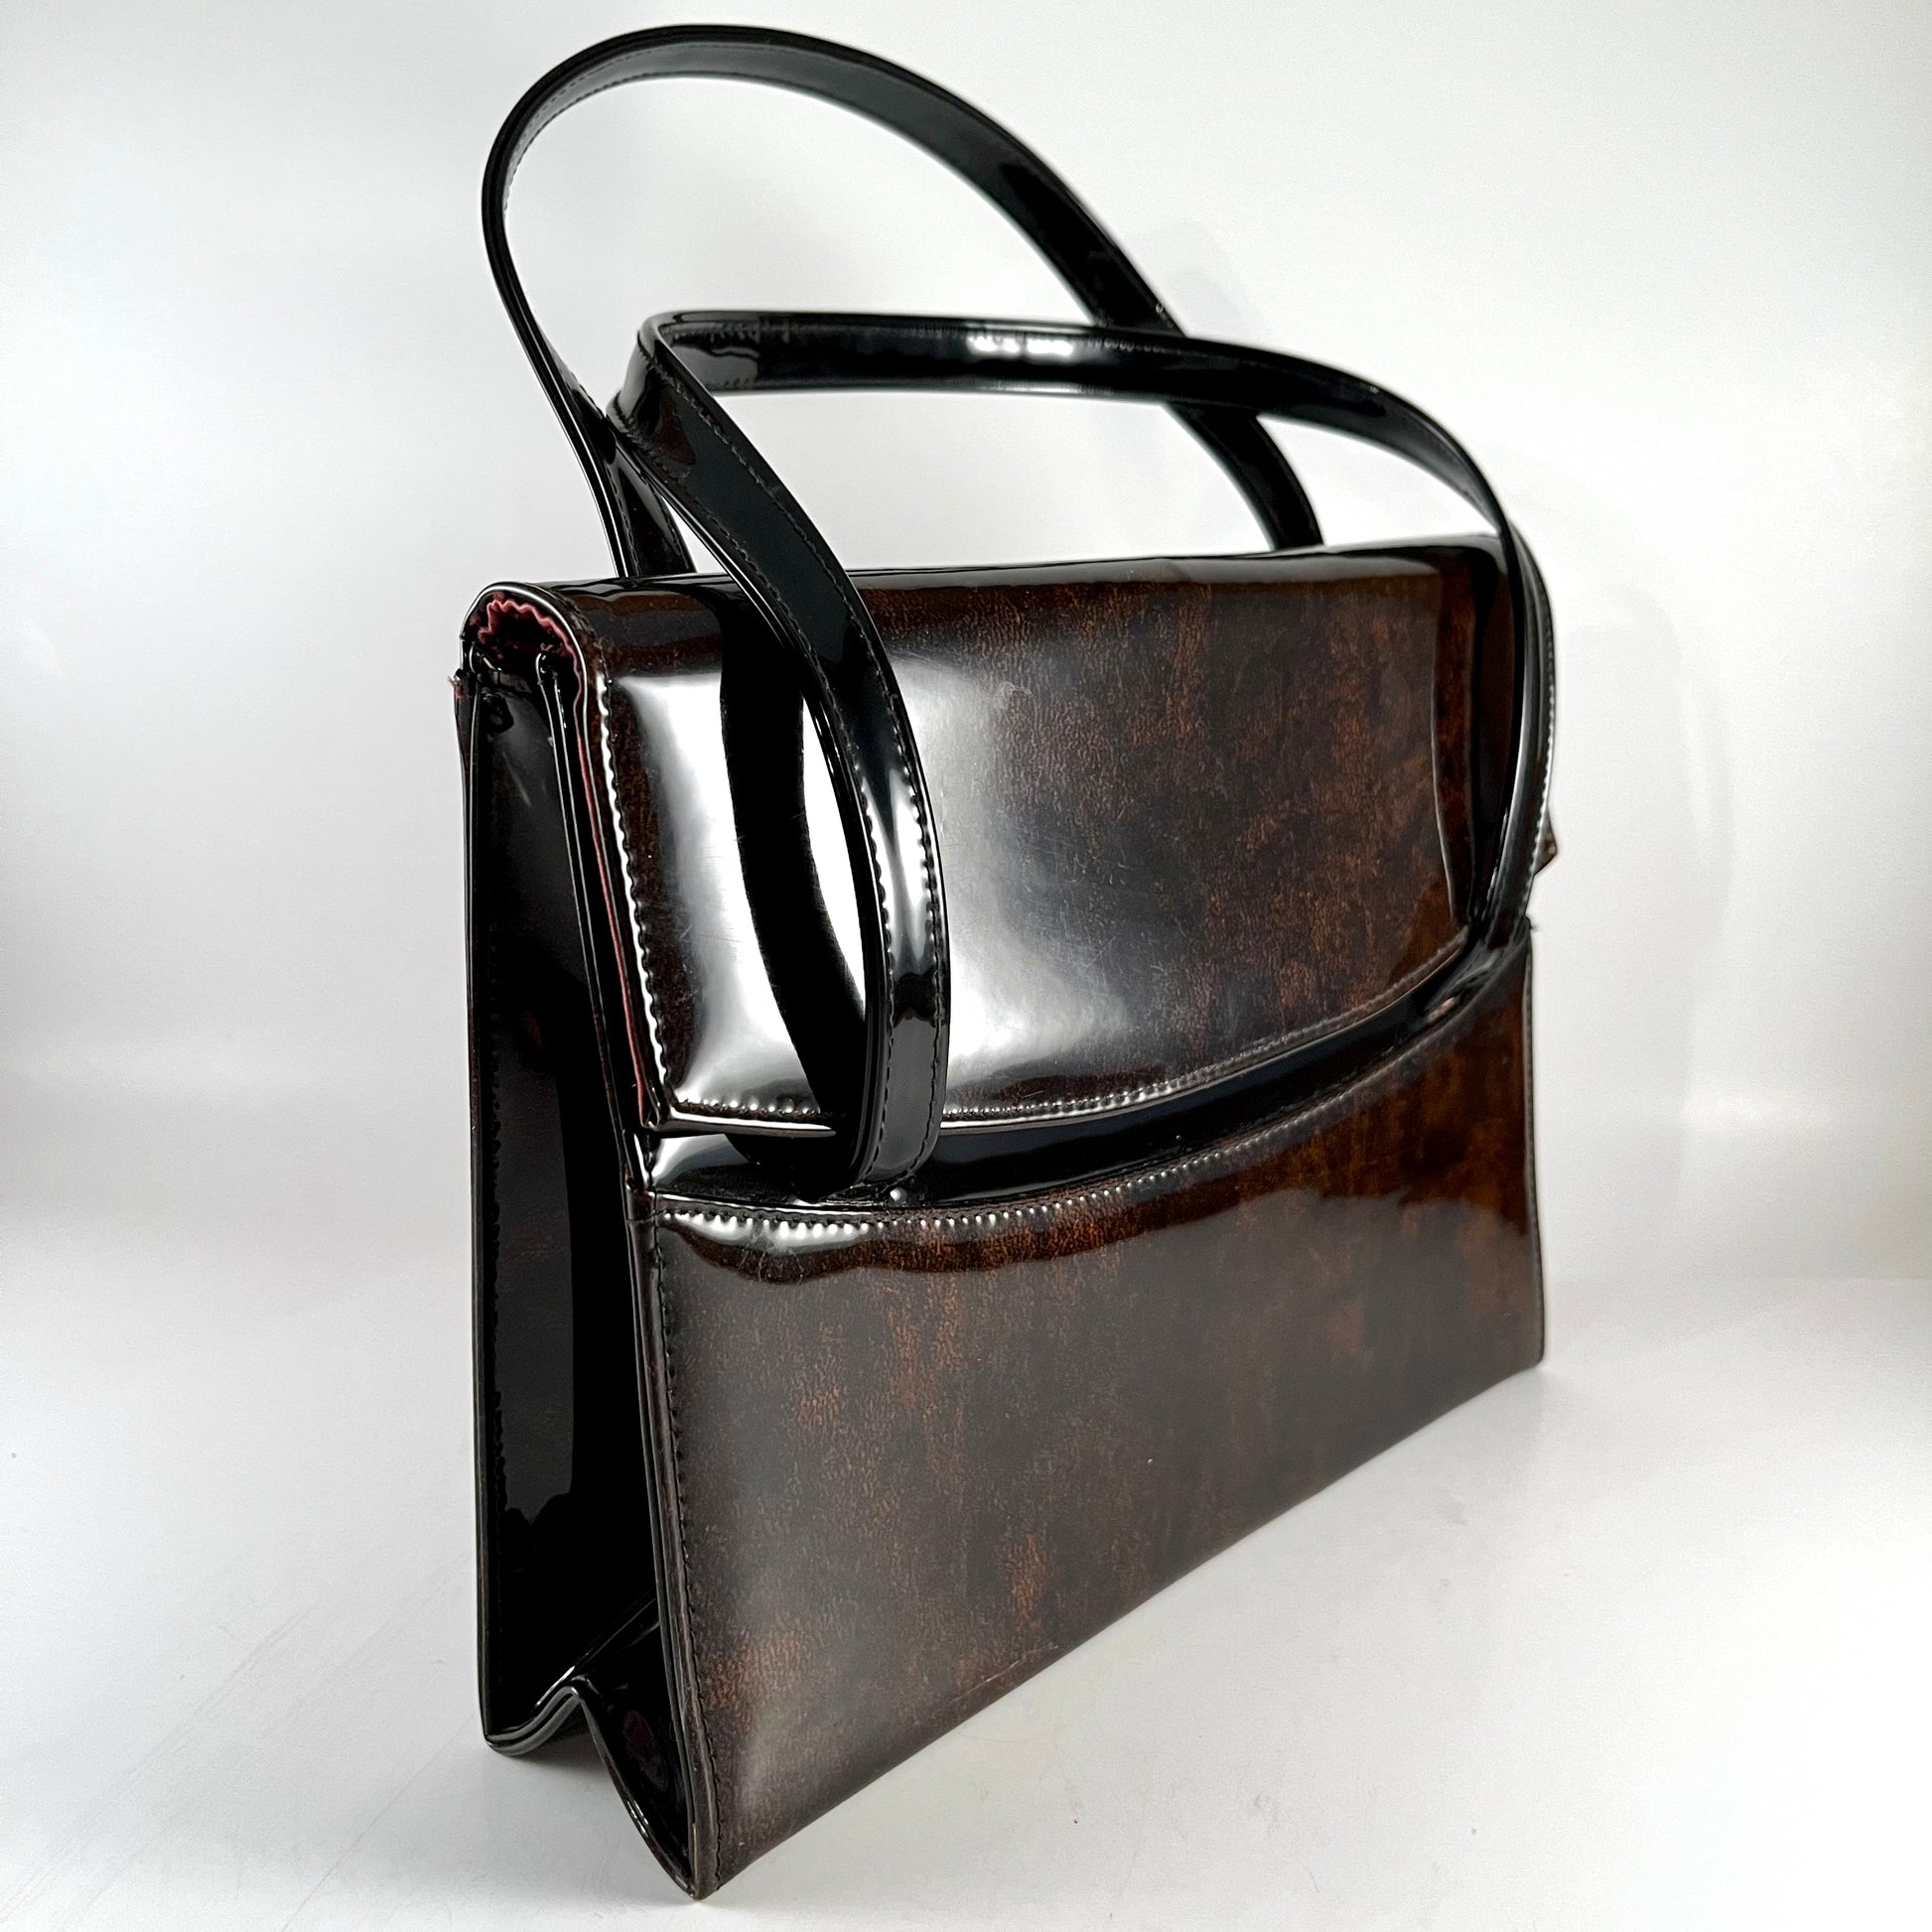 GUCCI Vintage Black Patent Leather Hand Bag 1940s Gucci